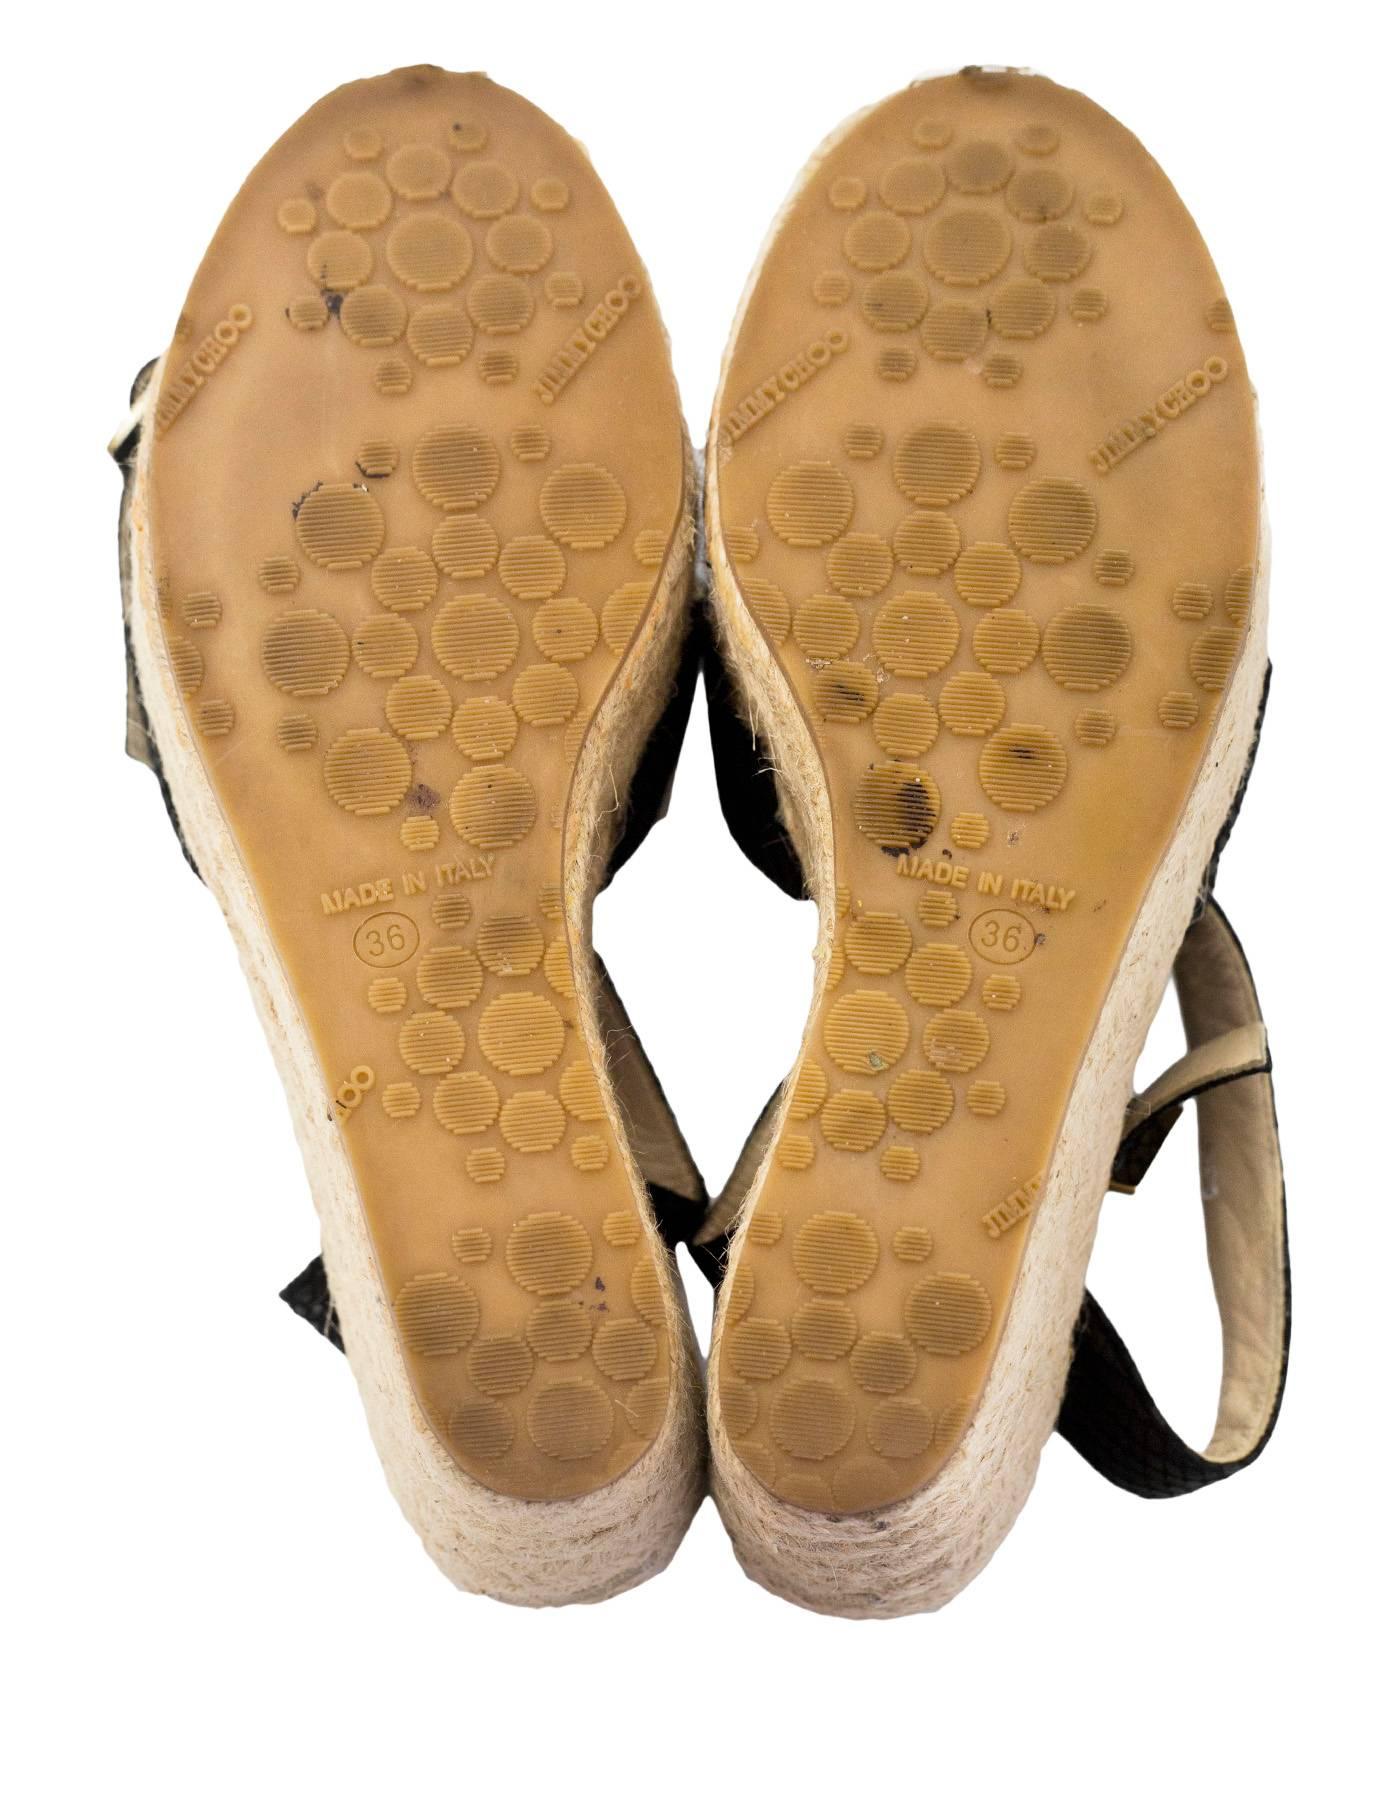 Jimmy Choo Black Embossed Snakeskin Platform Sandals Sz 36 with Box 1